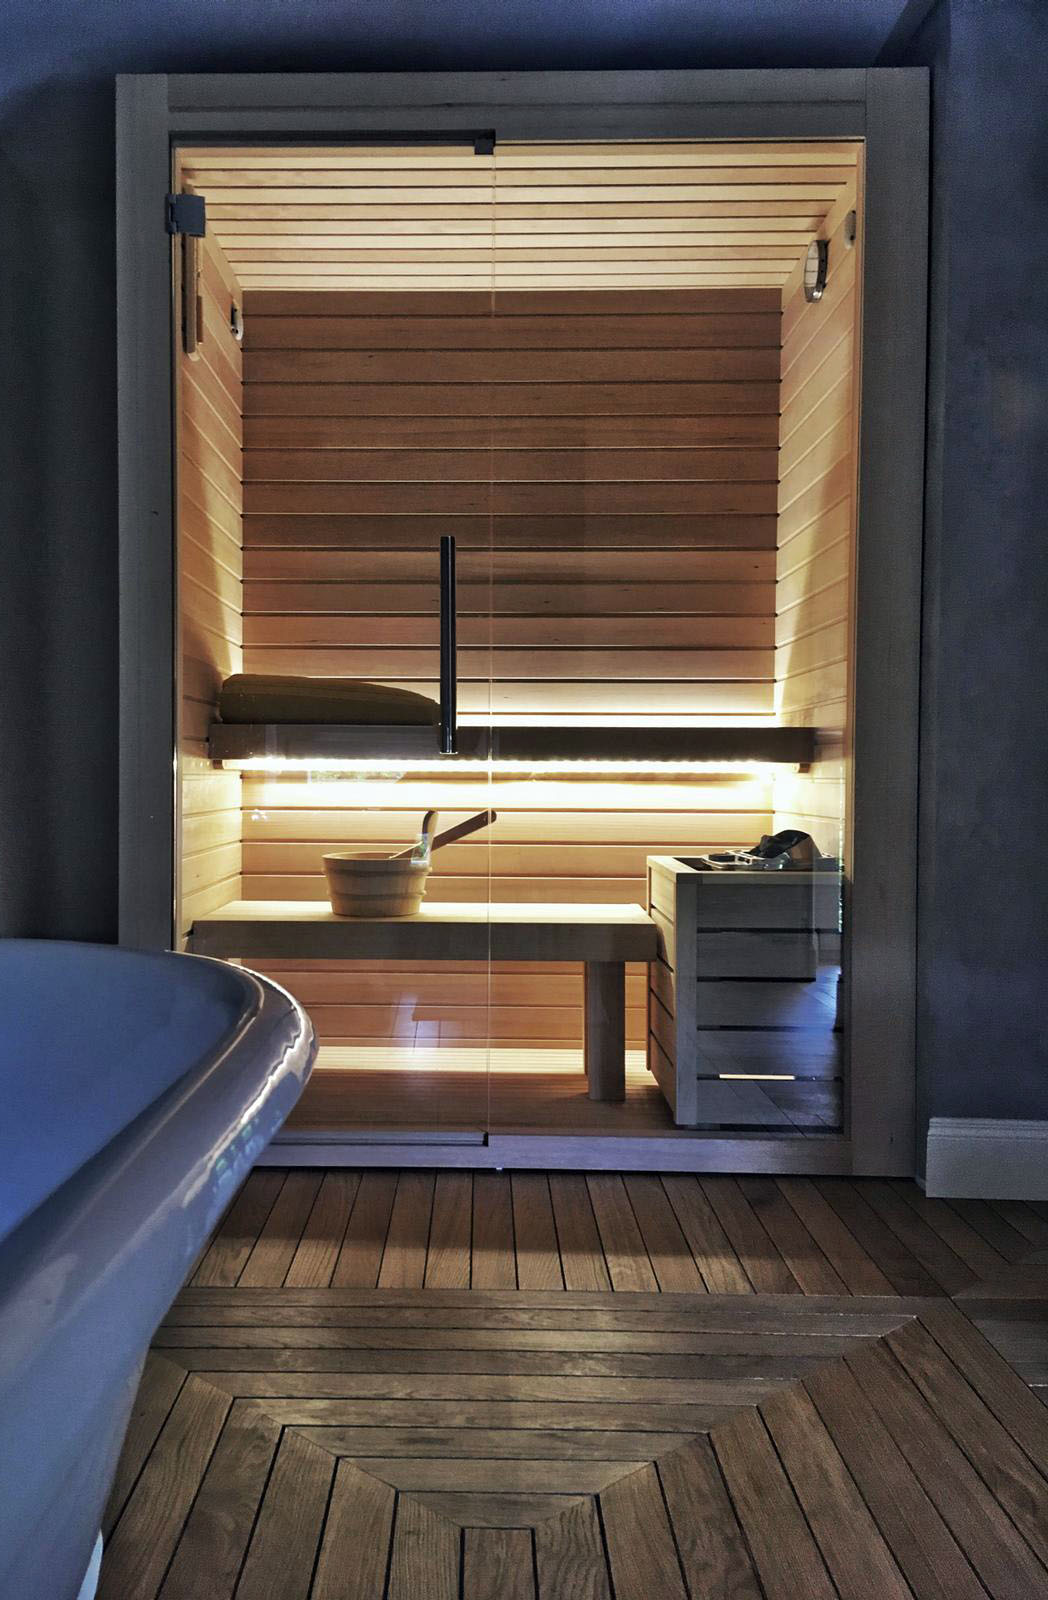 idus sauna saune bagno turco cabin produttore artigianale comprare